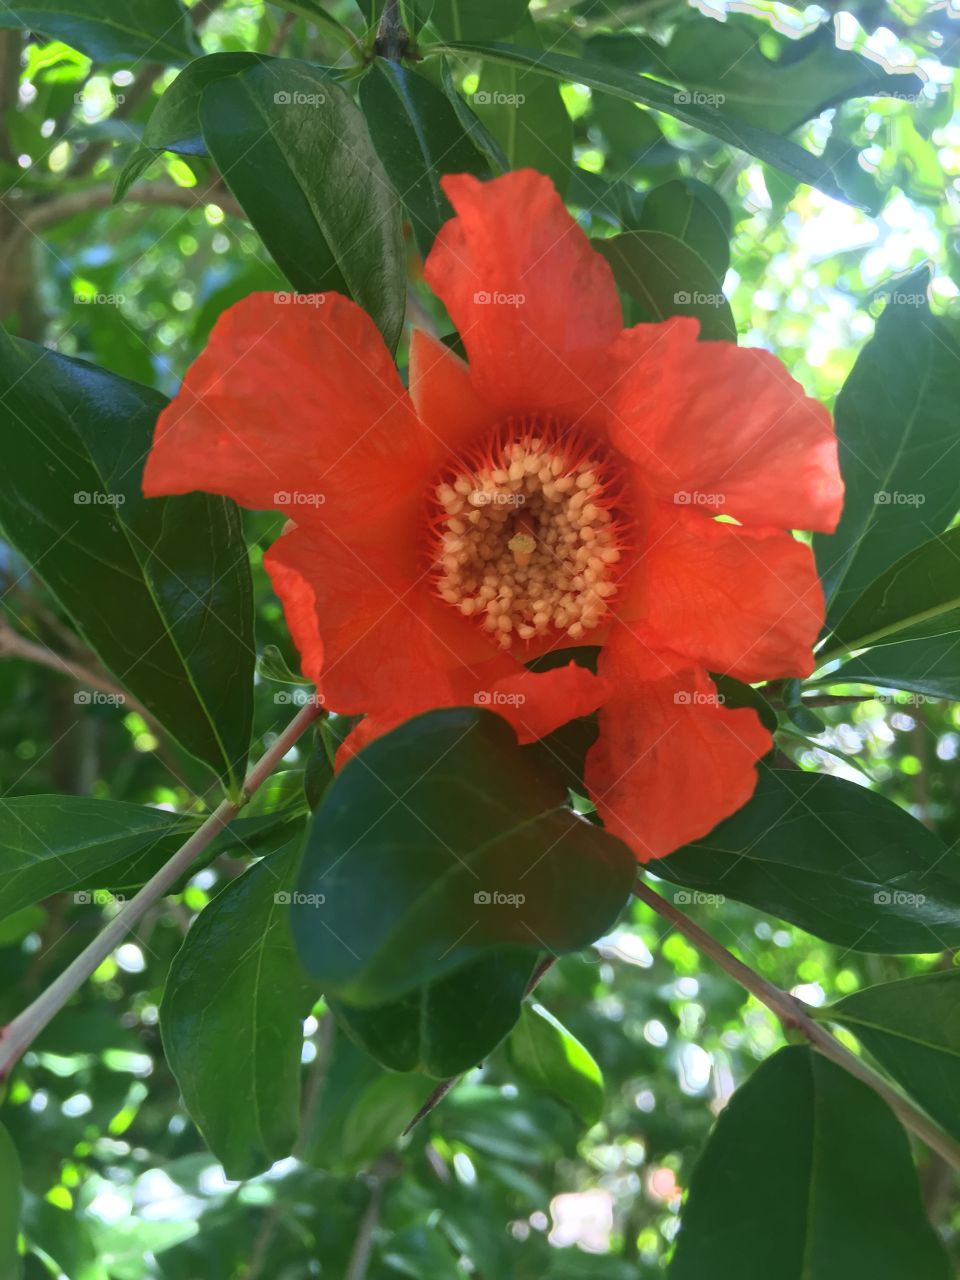 Pomegranate flower bloom